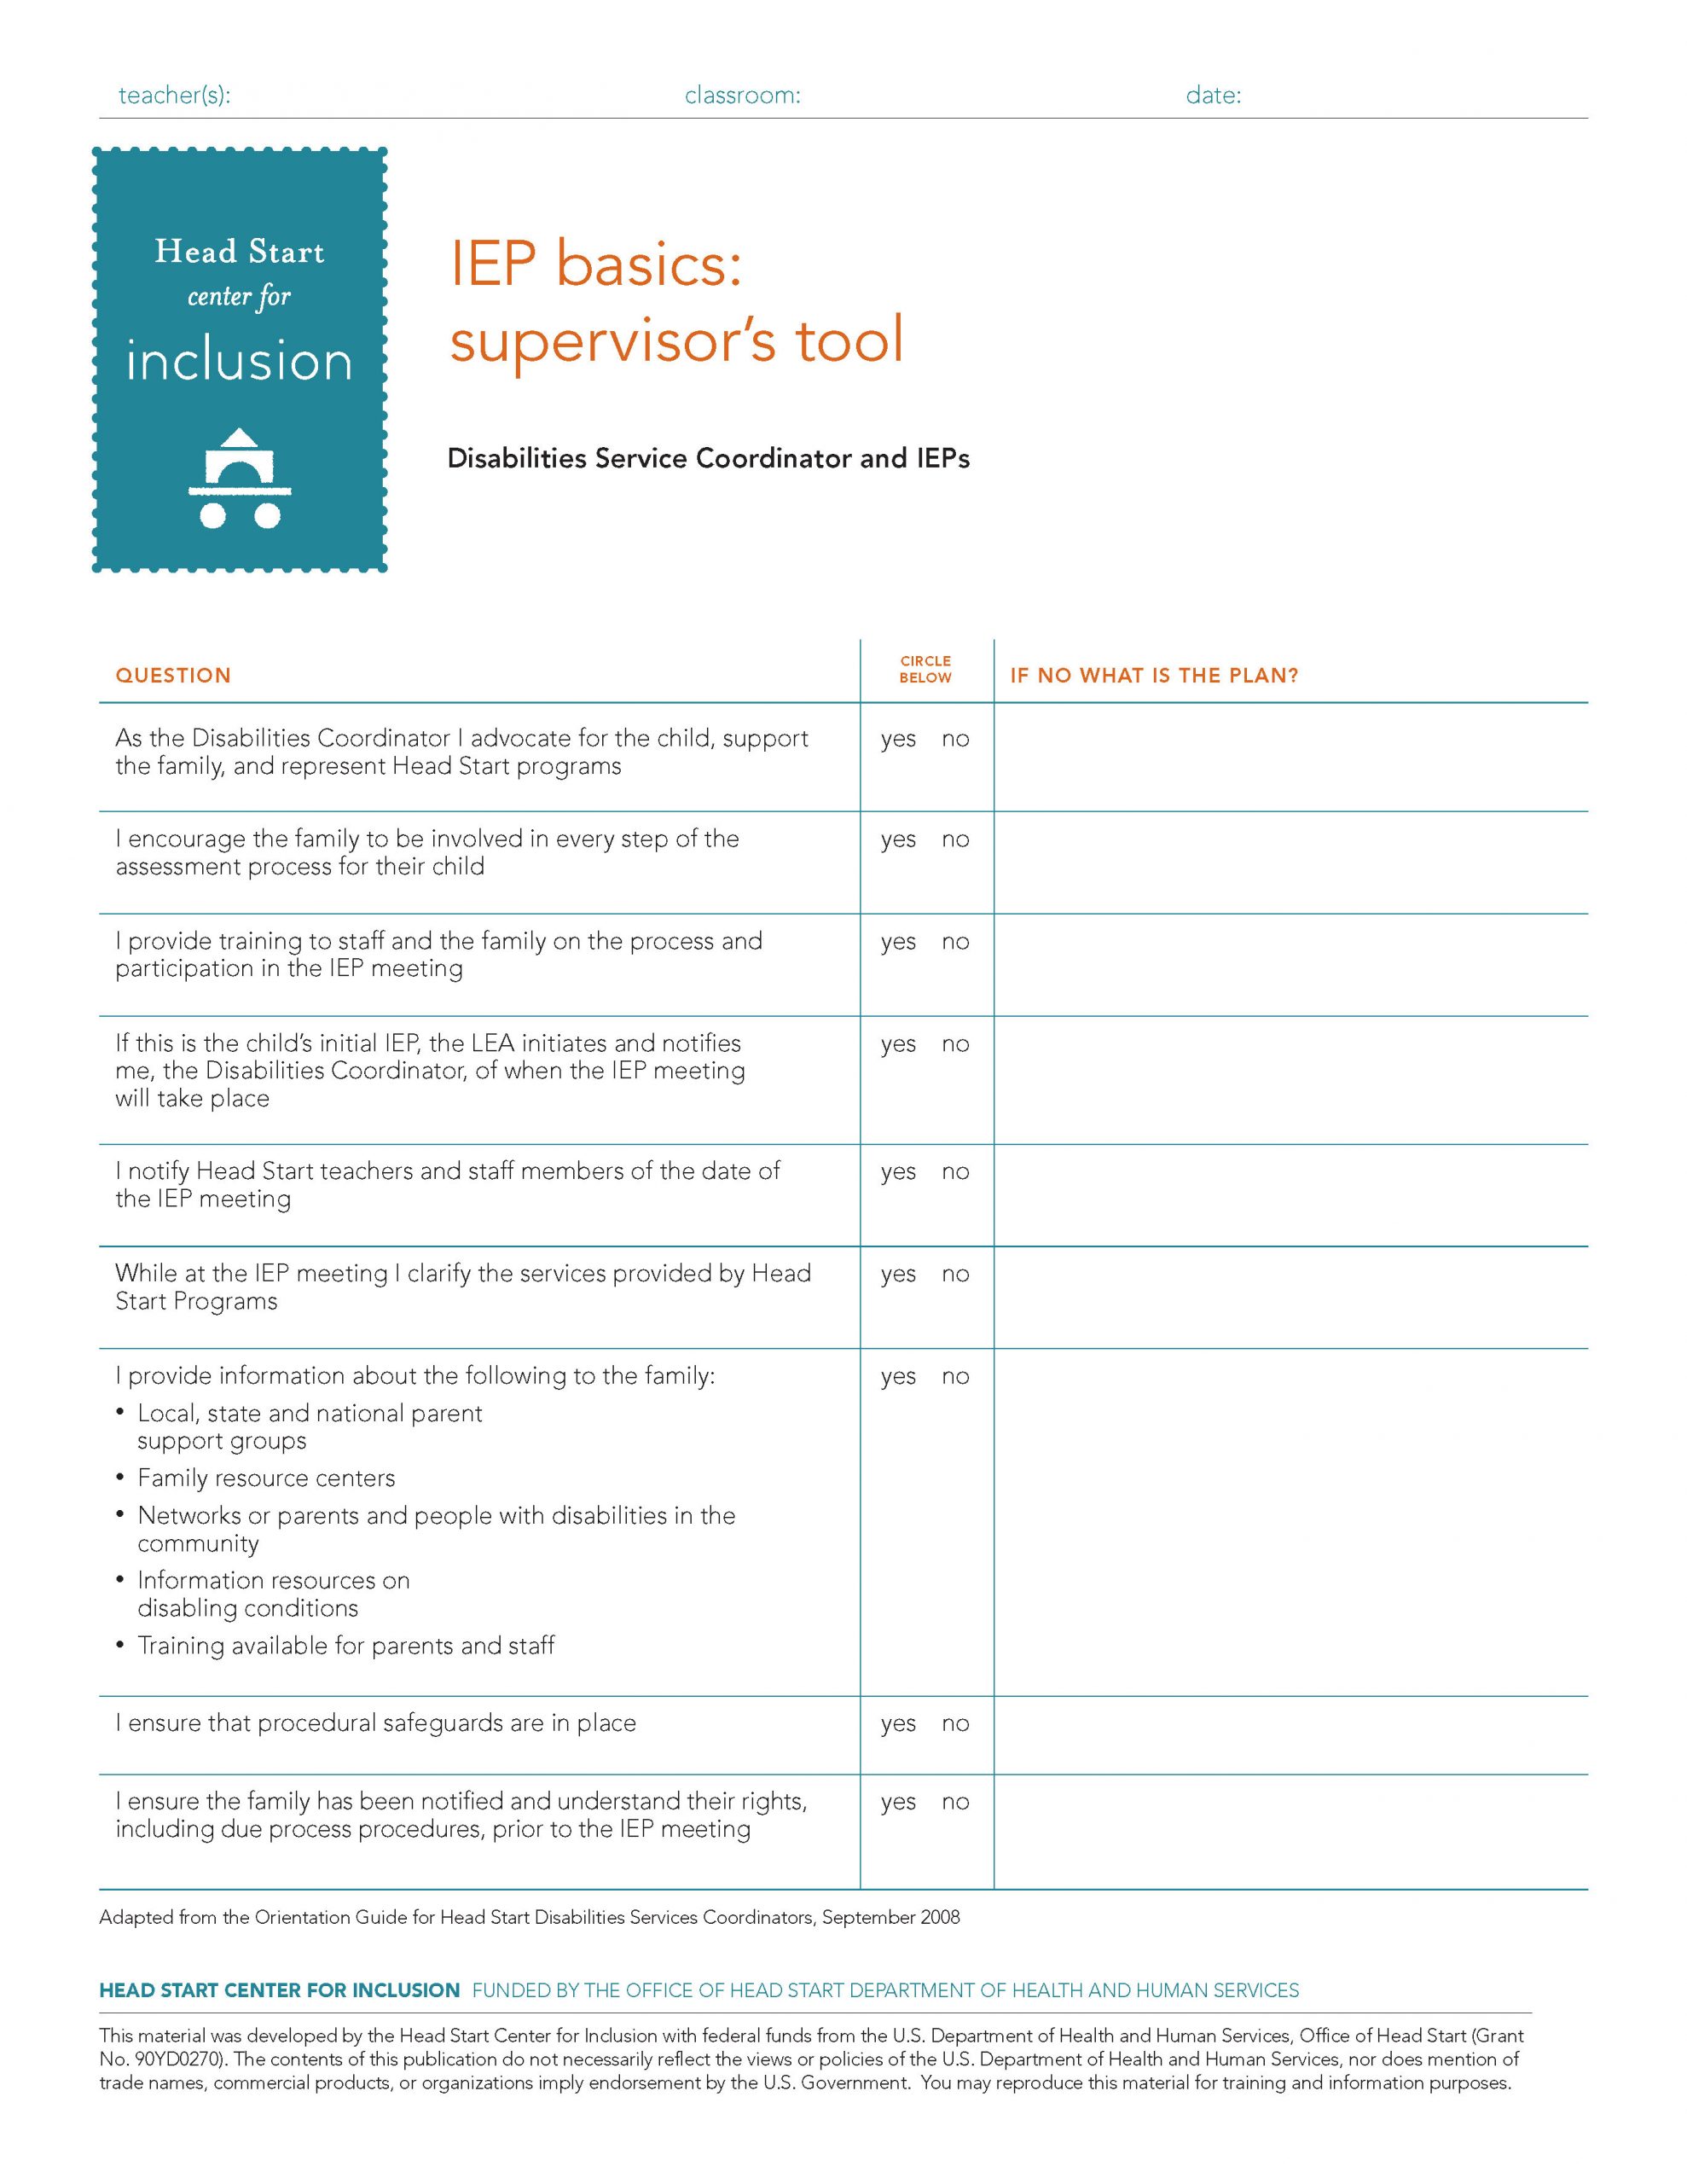 IEP basics- Supervisor's Tool